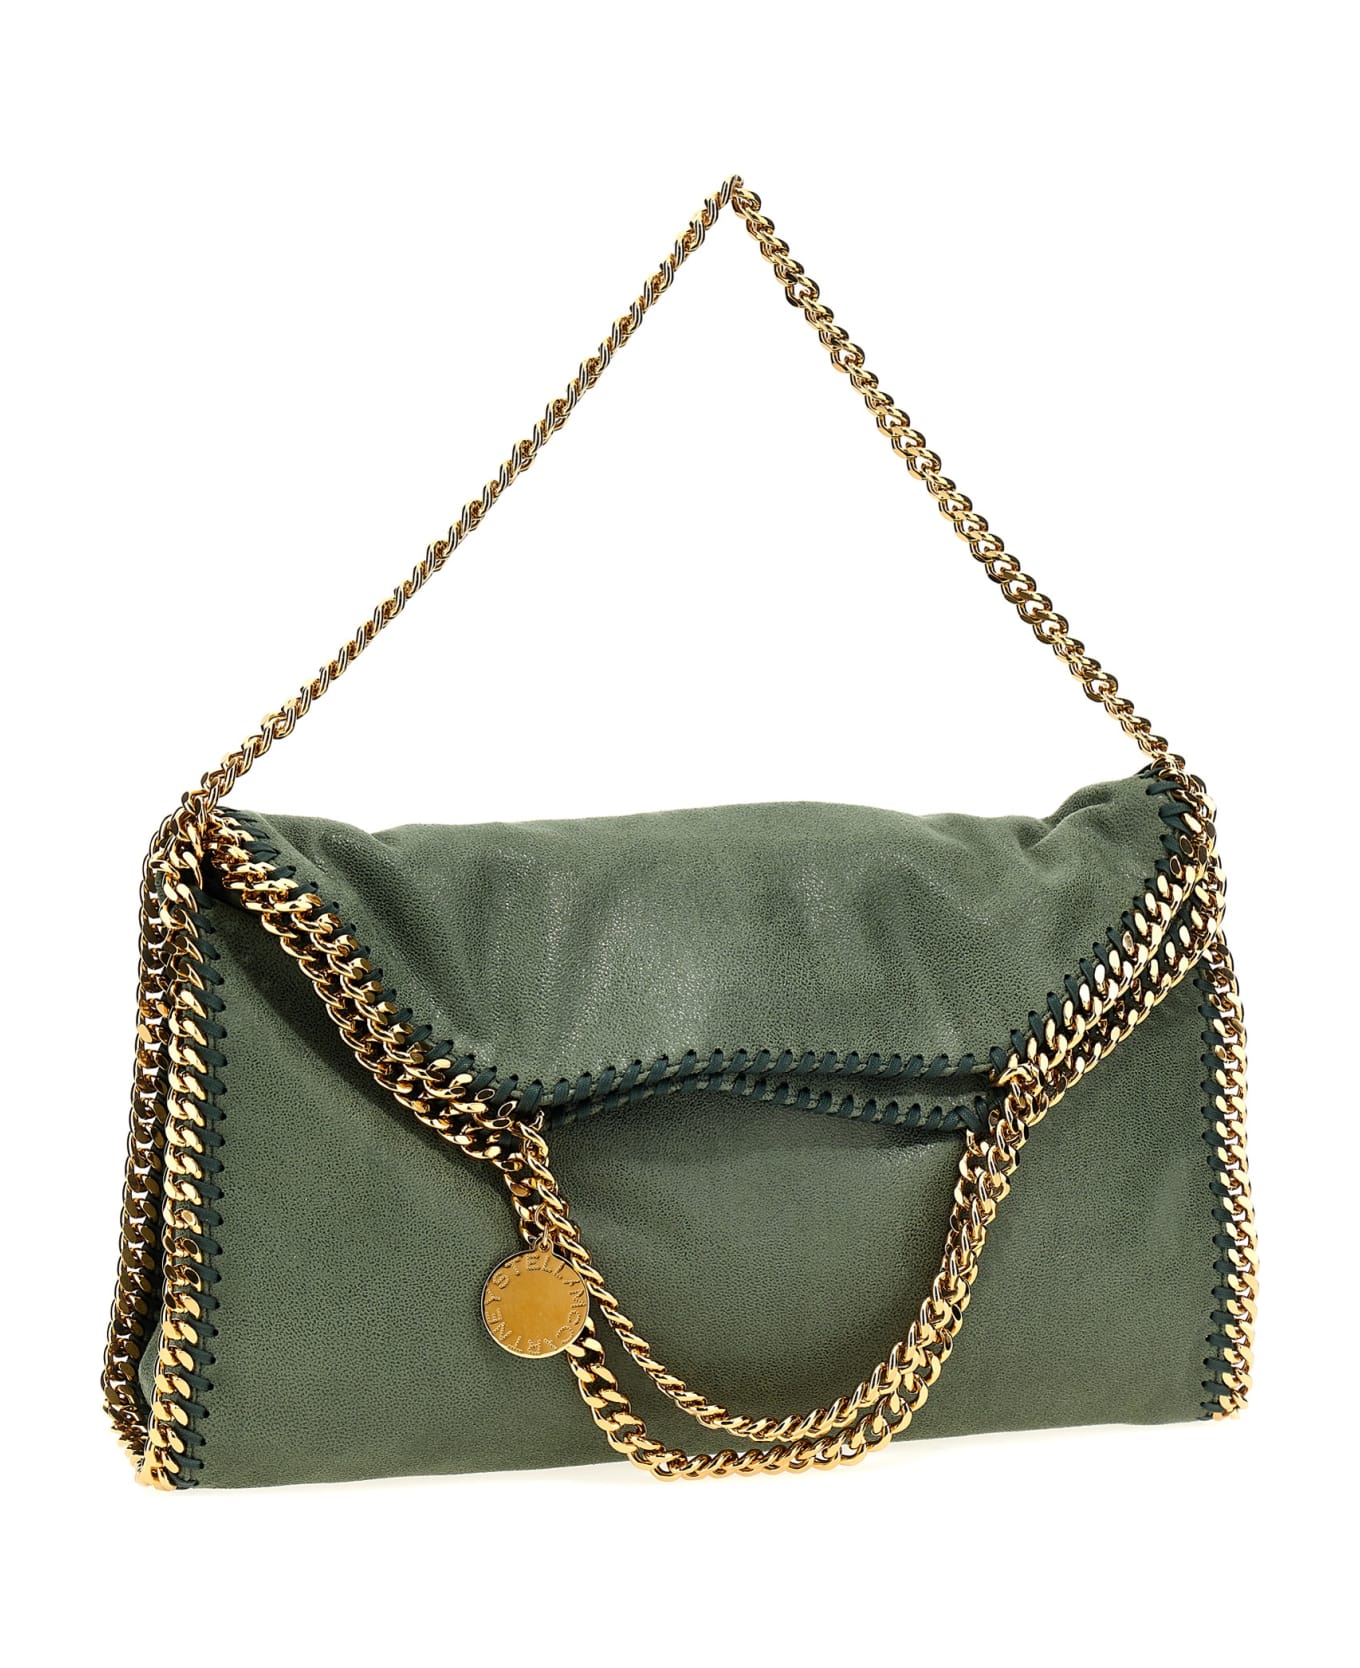 Stella McCartney Falabella 3 Chain Handbag - Stone Green トートバッグ